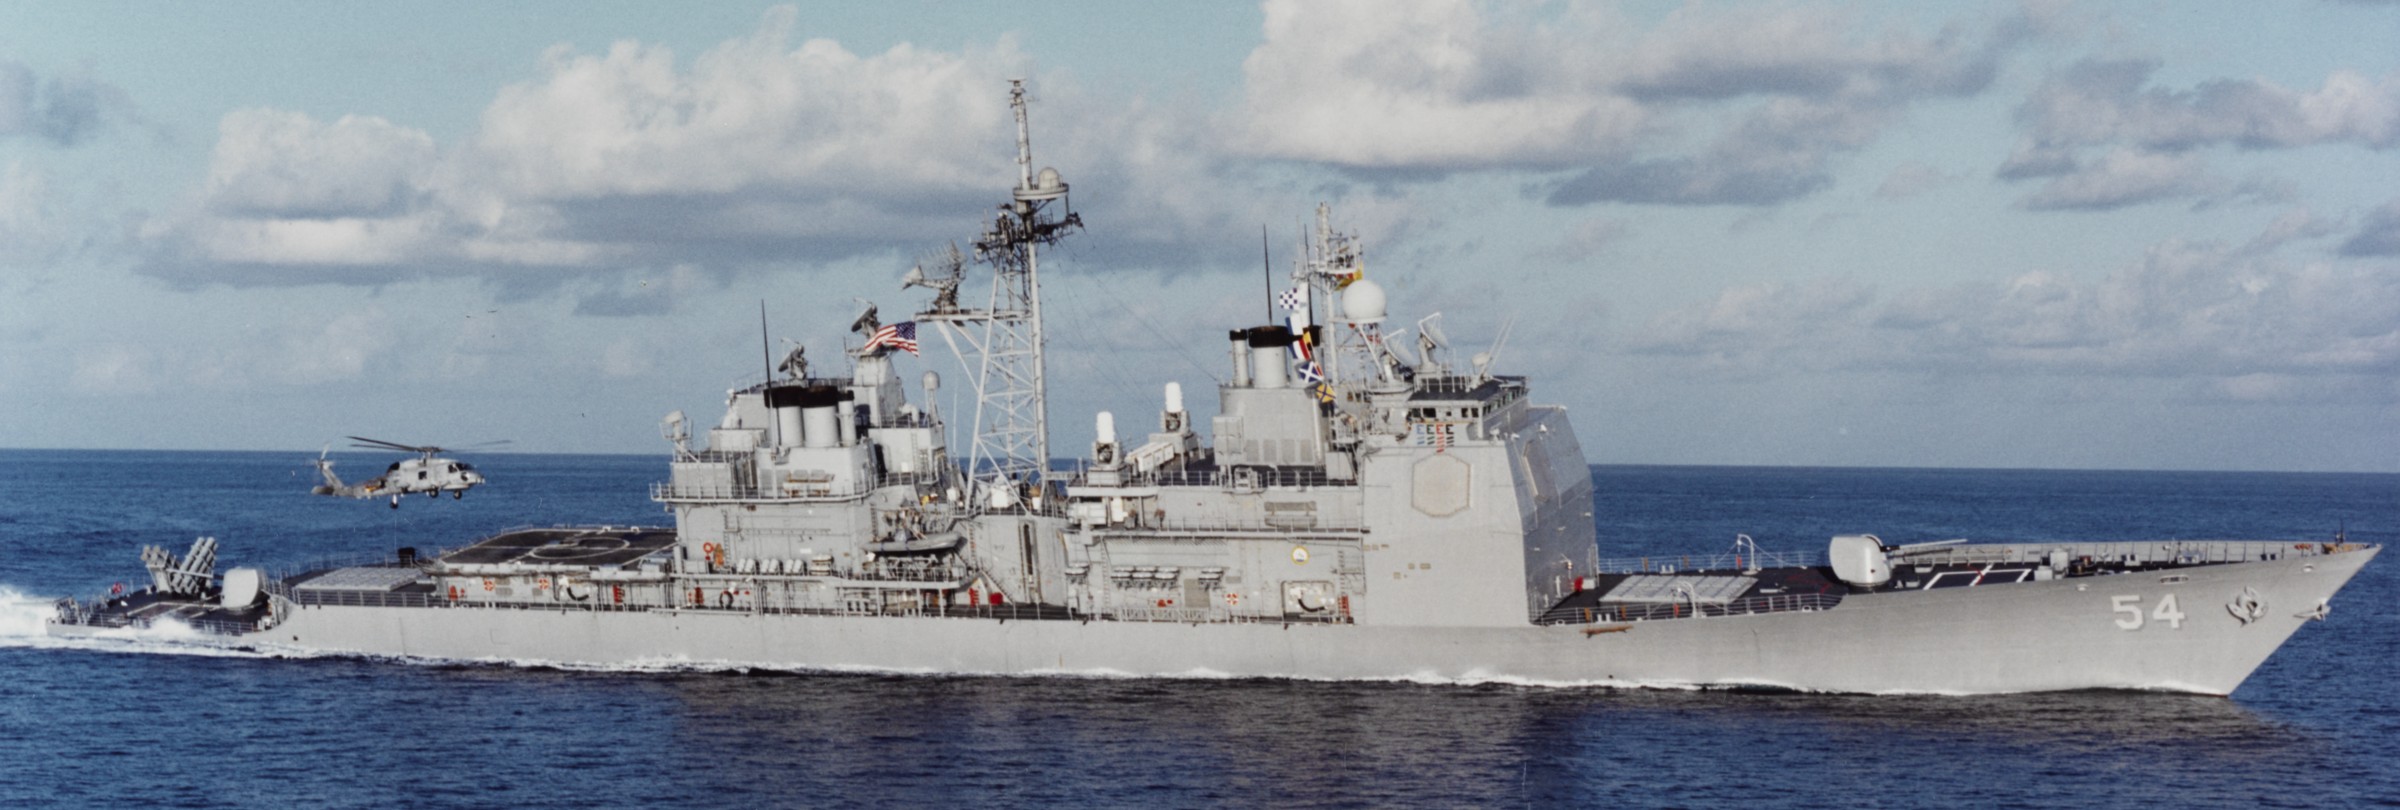 cg-54 uss antietam ticonderoga class guided missile cruiser aegis us navy 02